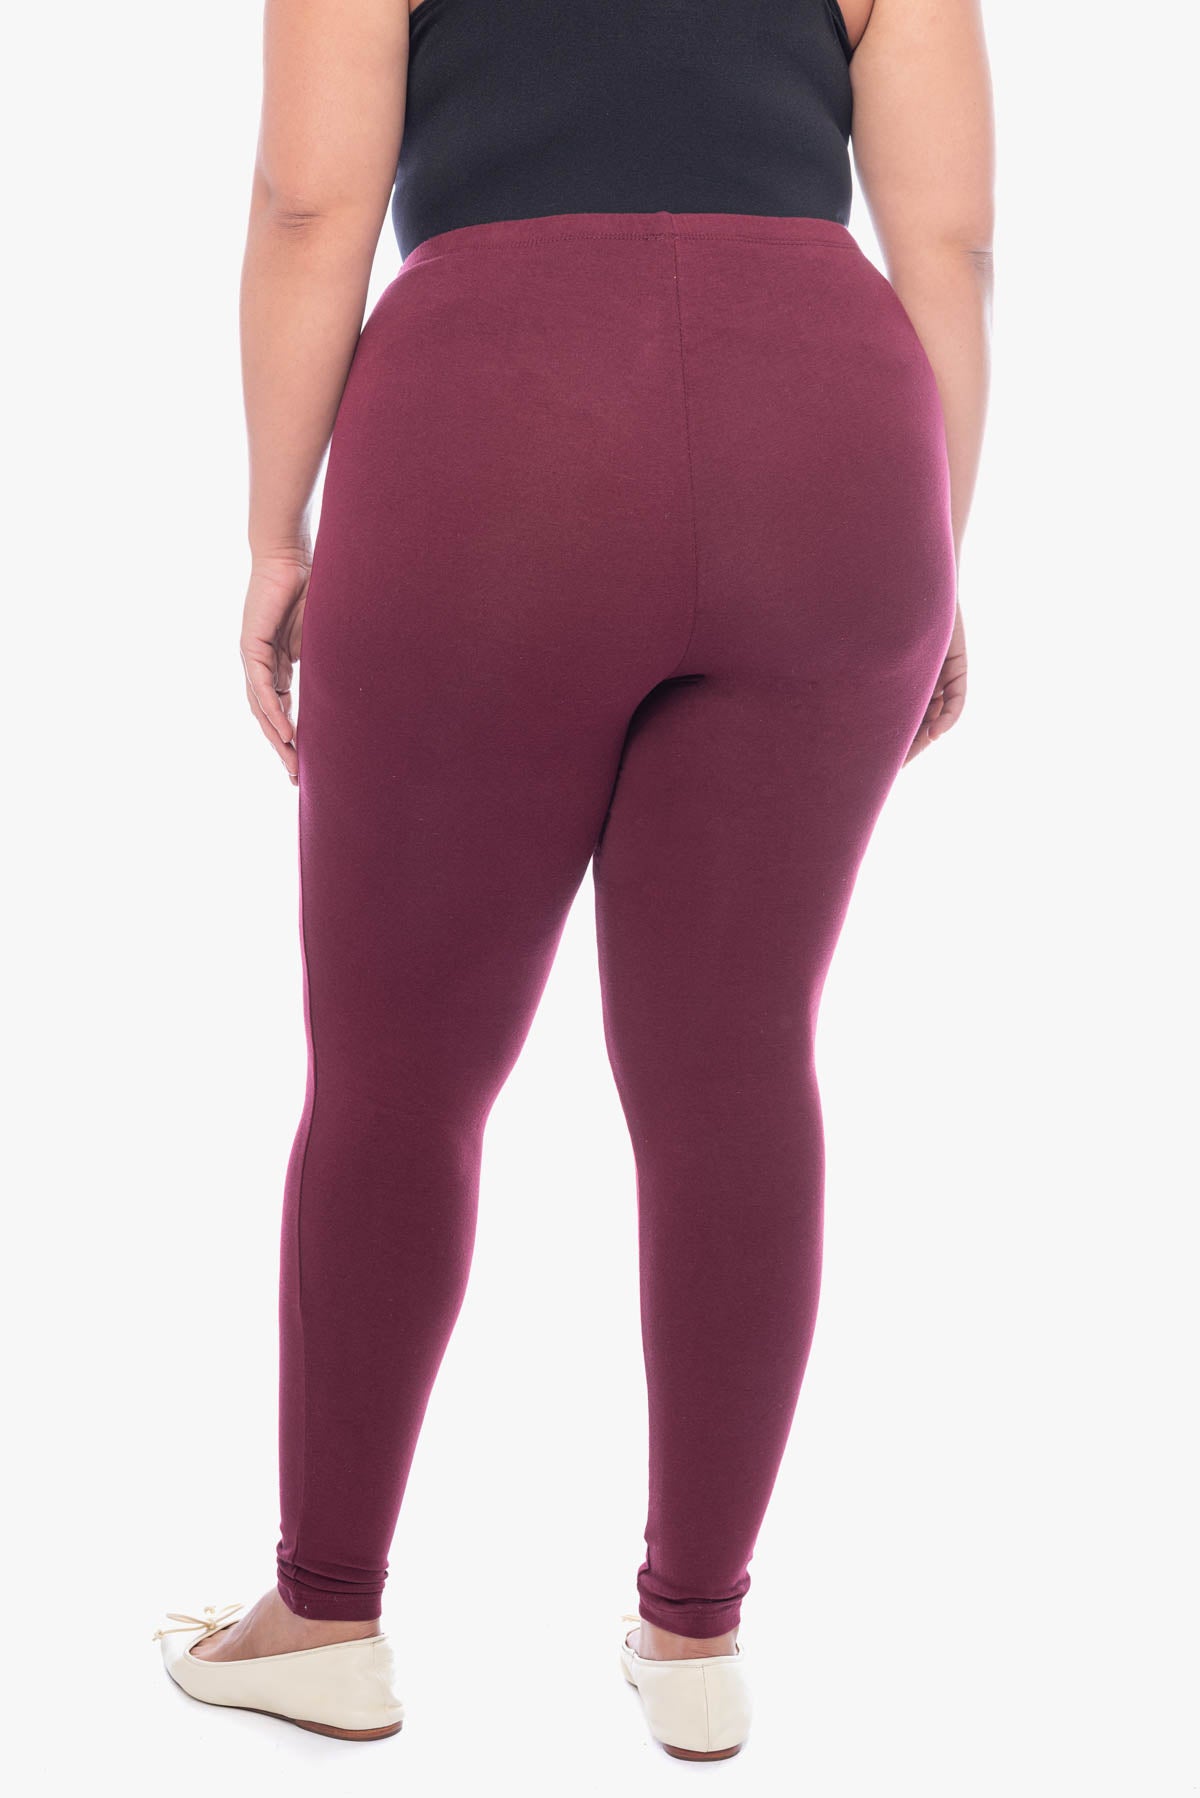 Buy HRINKAR BLACK PEACH RED Soft Cotton Lycra Plain girls leggings combo  Pack of 3 Size - L, XL, XXL - HLGCMB0622-XXL Online - Get 34% Off